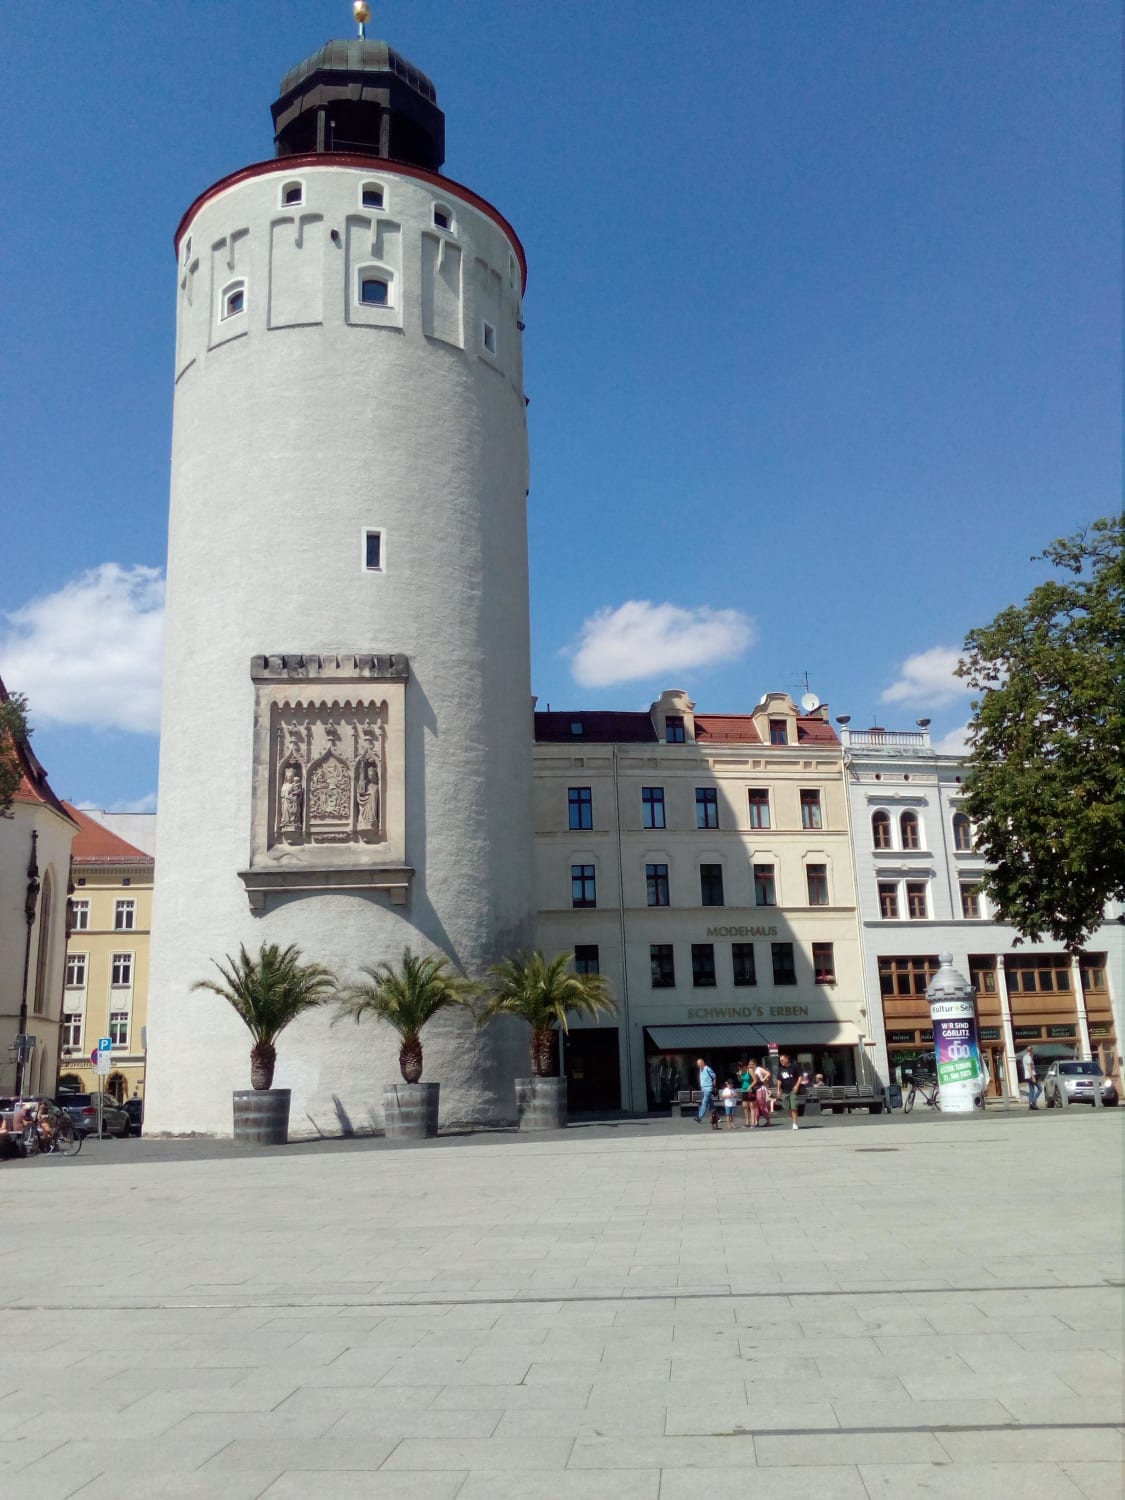 Thick tower (Dicker Turm) in Görlitz, Germany